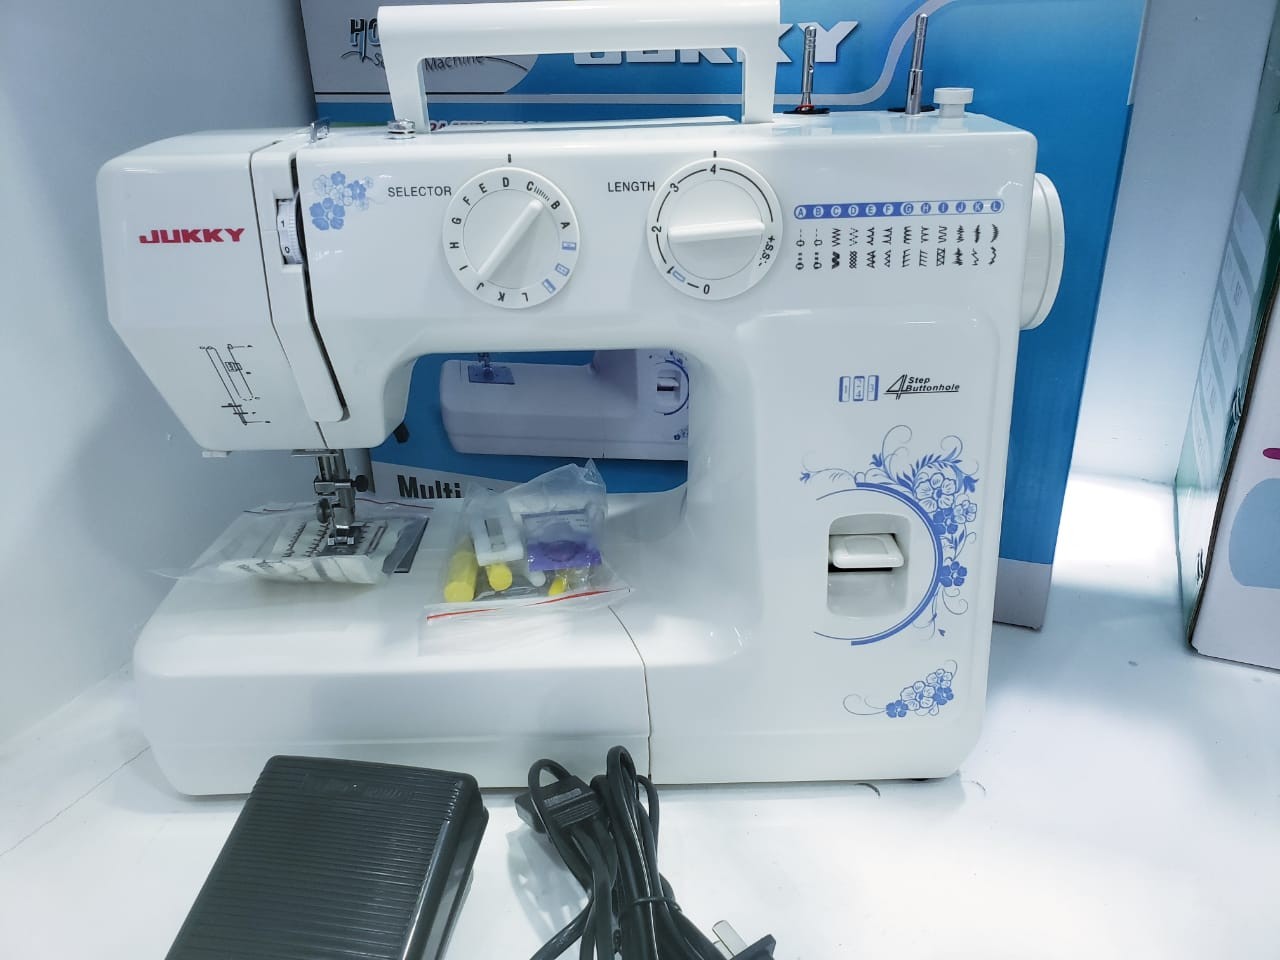 electrodomesticos - Maquina de coser Electrica multifuncional profesional JUKKY FH6224 1